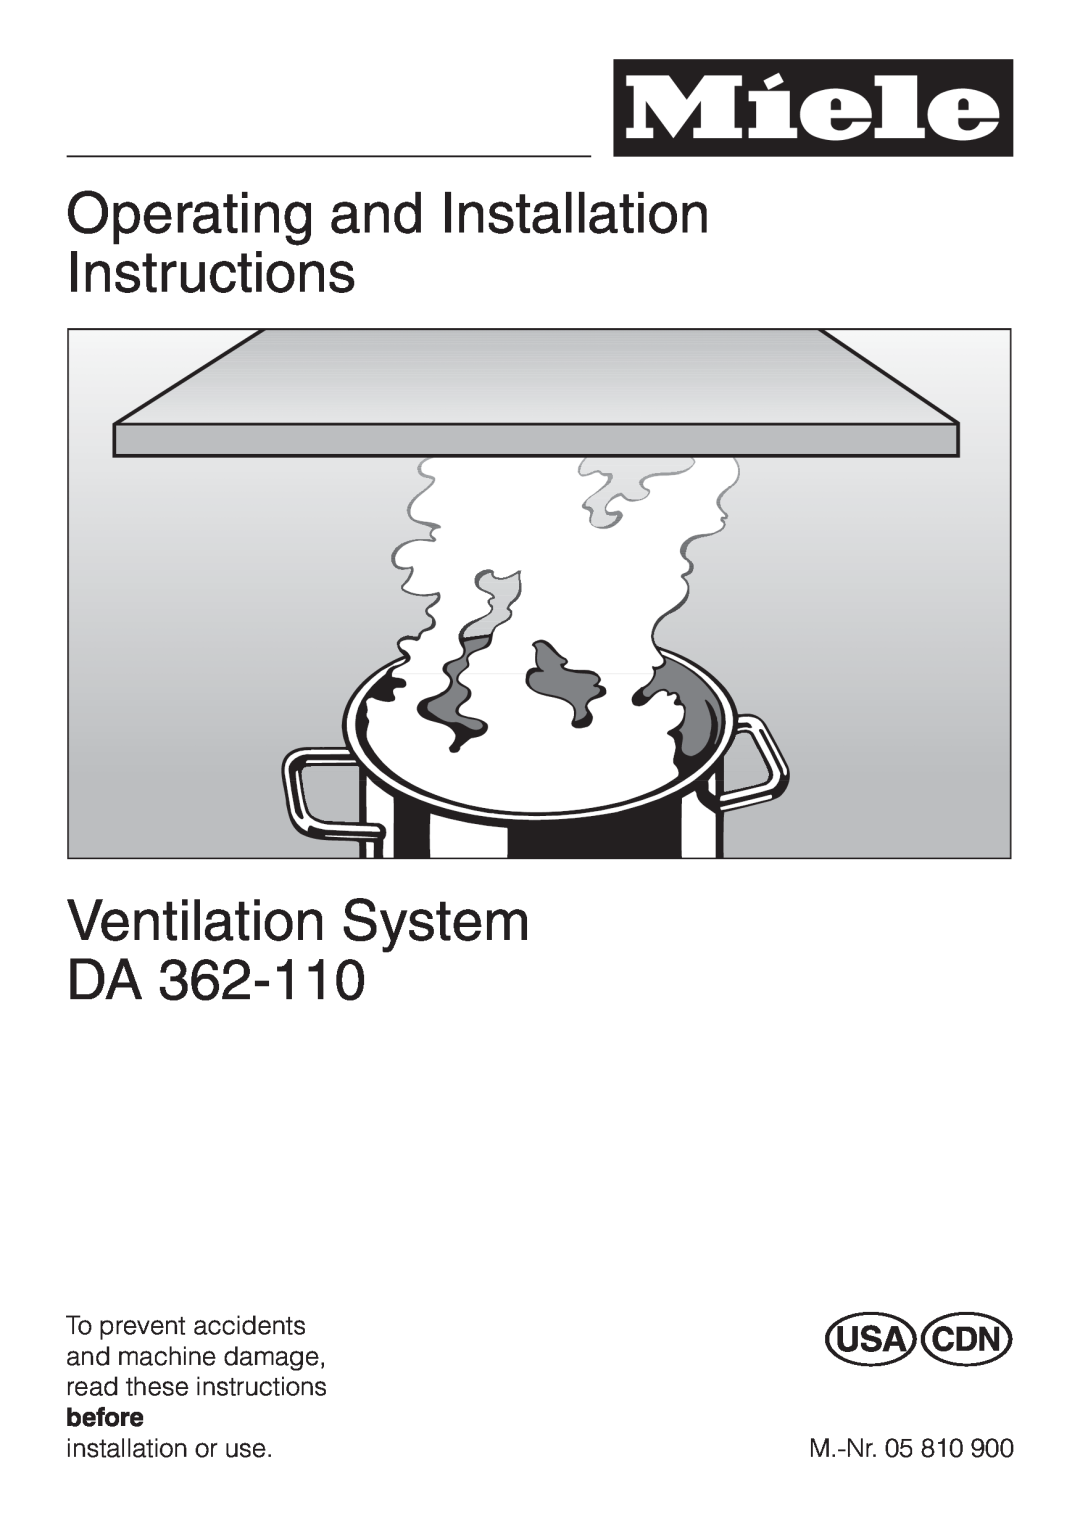 Miele DA362-110 installation instructions Operating and Installation Instructions, Ventilation System DA 